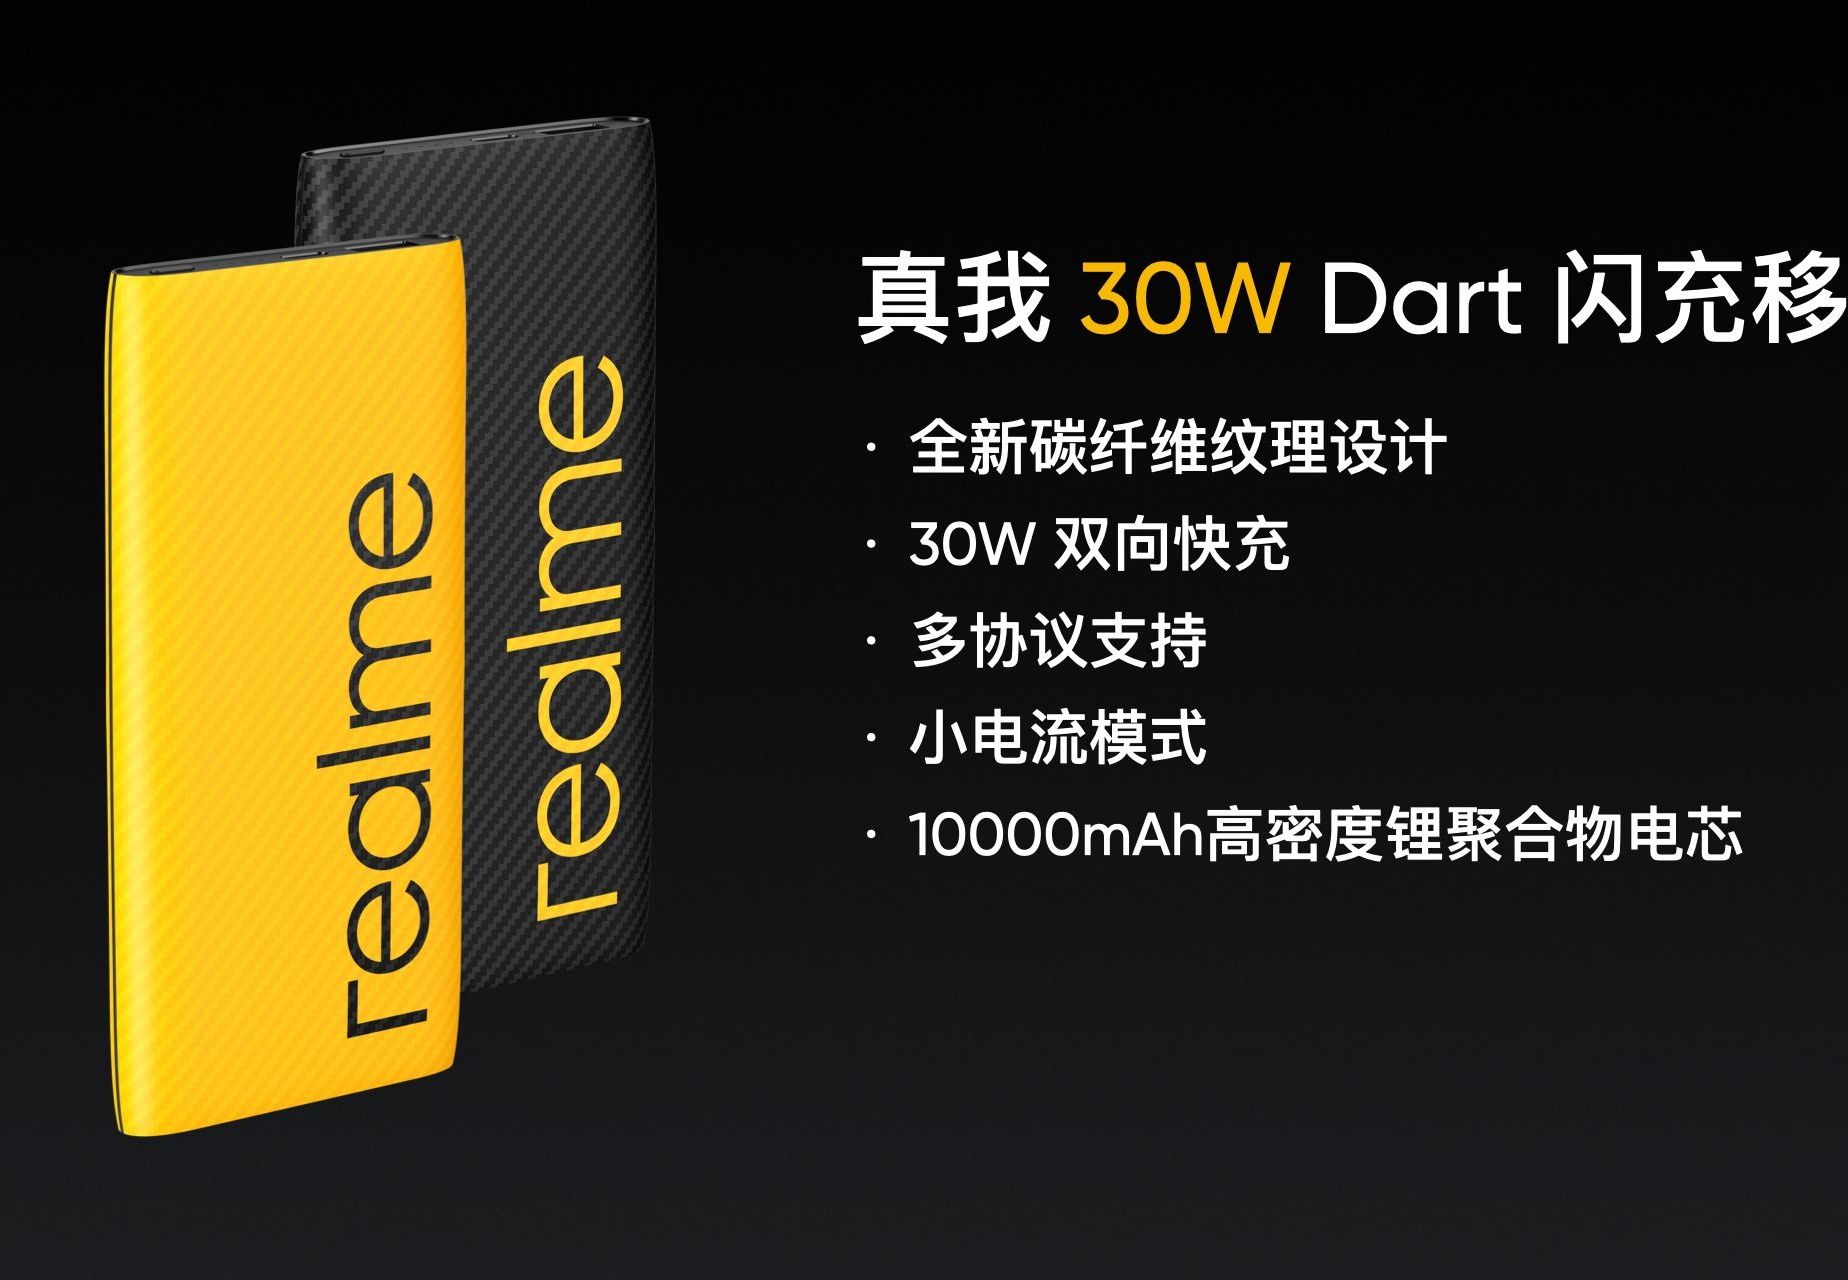 Realme تُعلن أيضًا عن البطاريات المحمولة Realme 30W Dart و Realme Power Bank 2